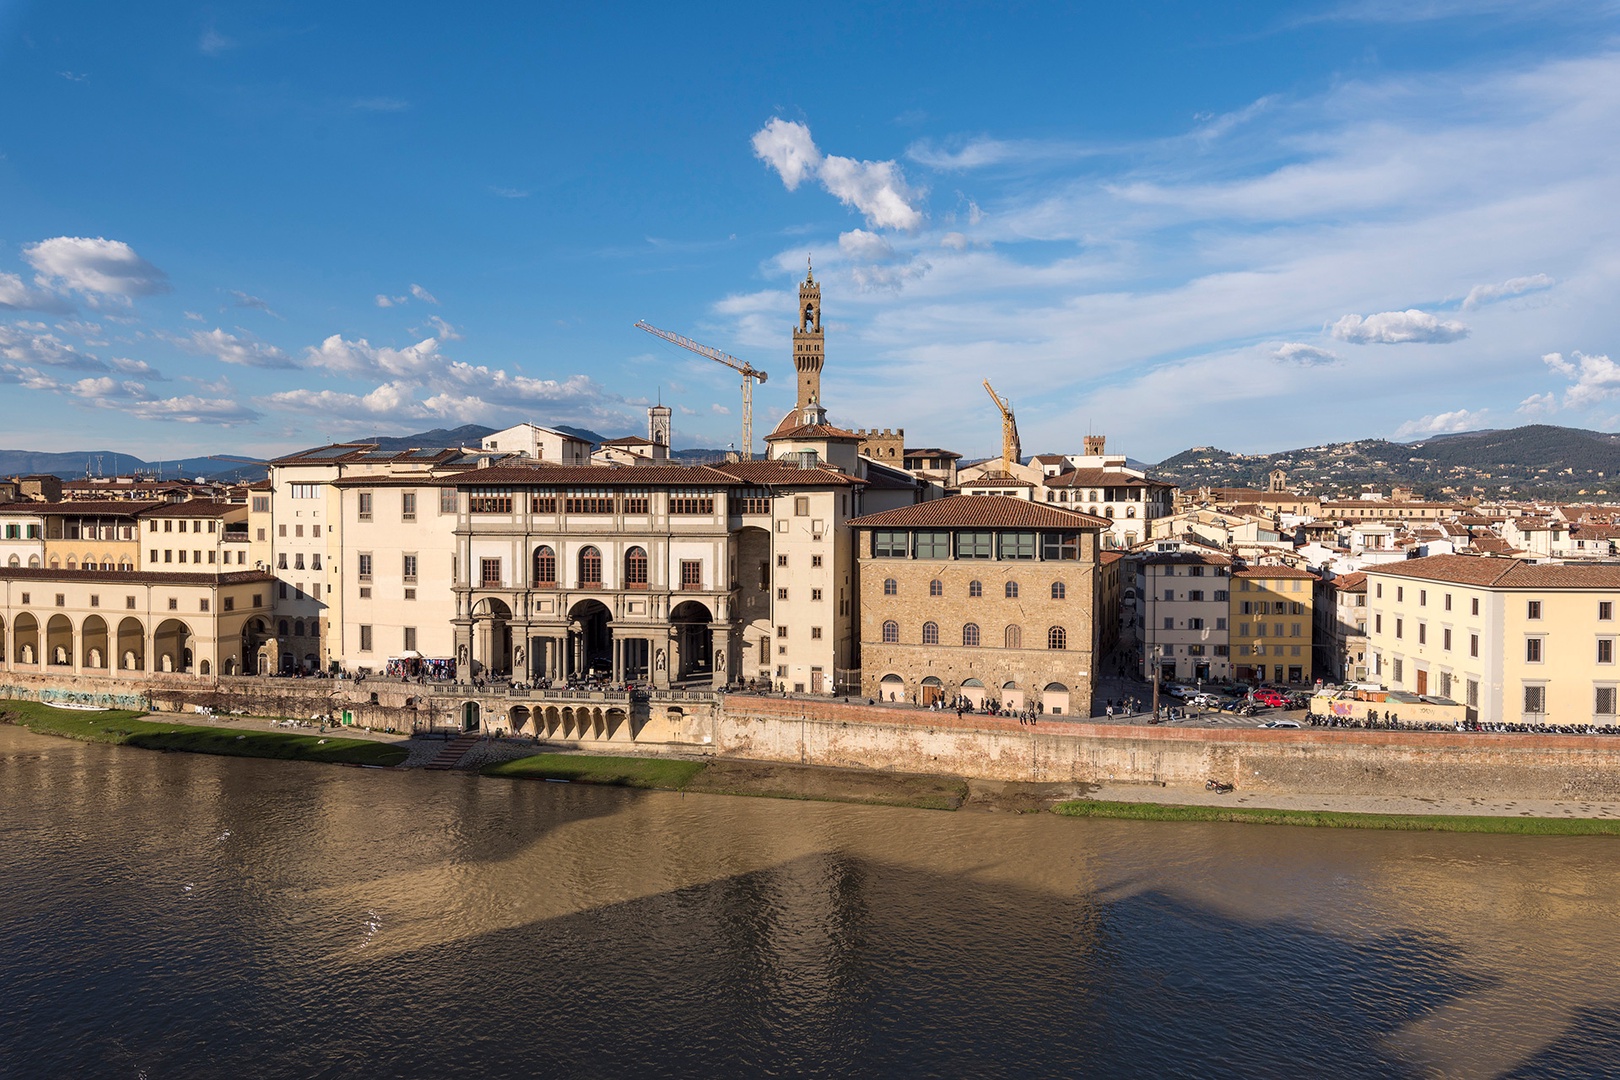 Admire the beautiful Renaissance facade of the Uffizi across the river.